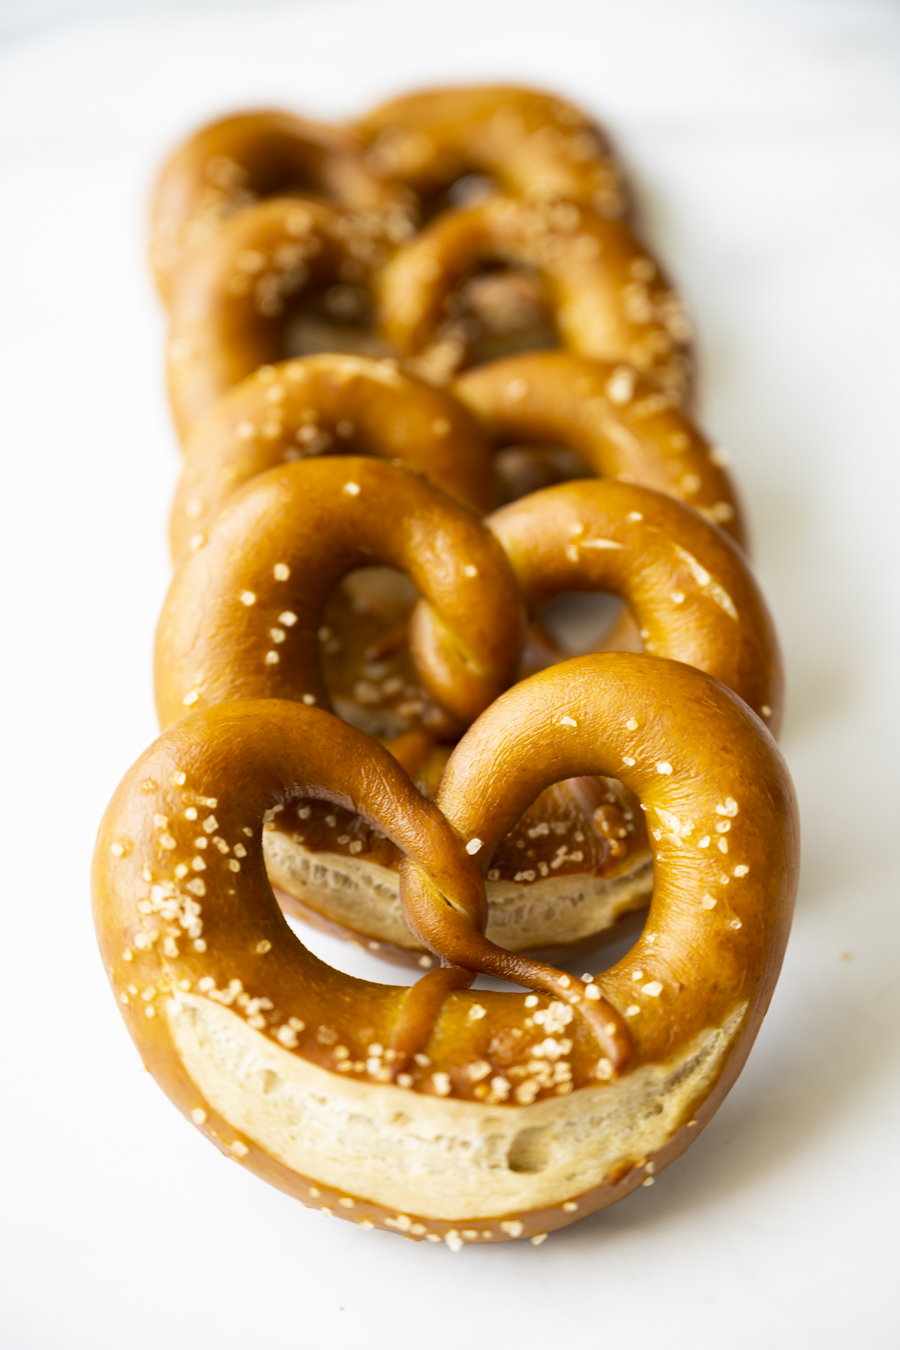 Sourdough Baking Journal: I like soft pretzels and I cannot lye